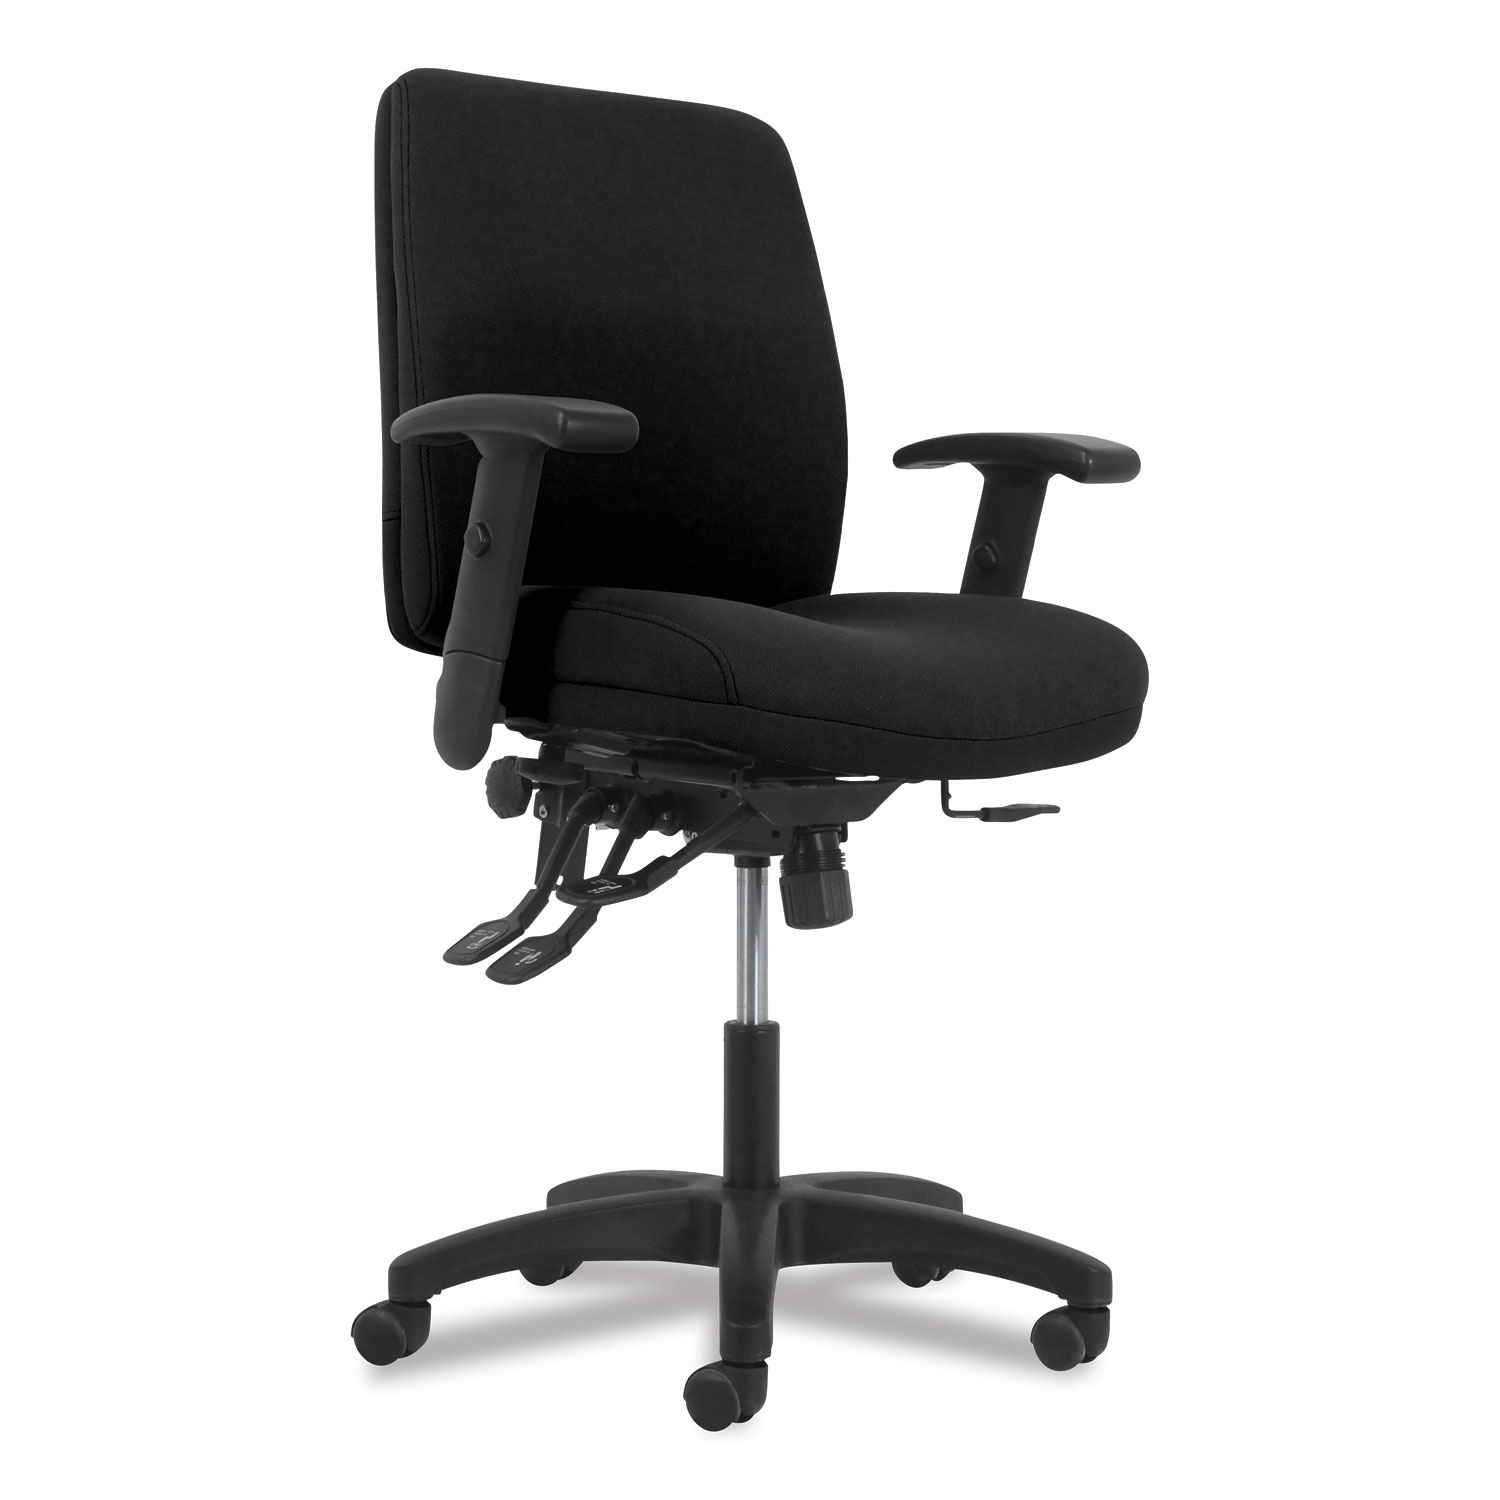  HON HONVL282A2VA10T Network Mid-Back Task Chair, Supports up to 250 lbs., Black Seat/Black Back, Black Base (HONVL282A2VA10T) 